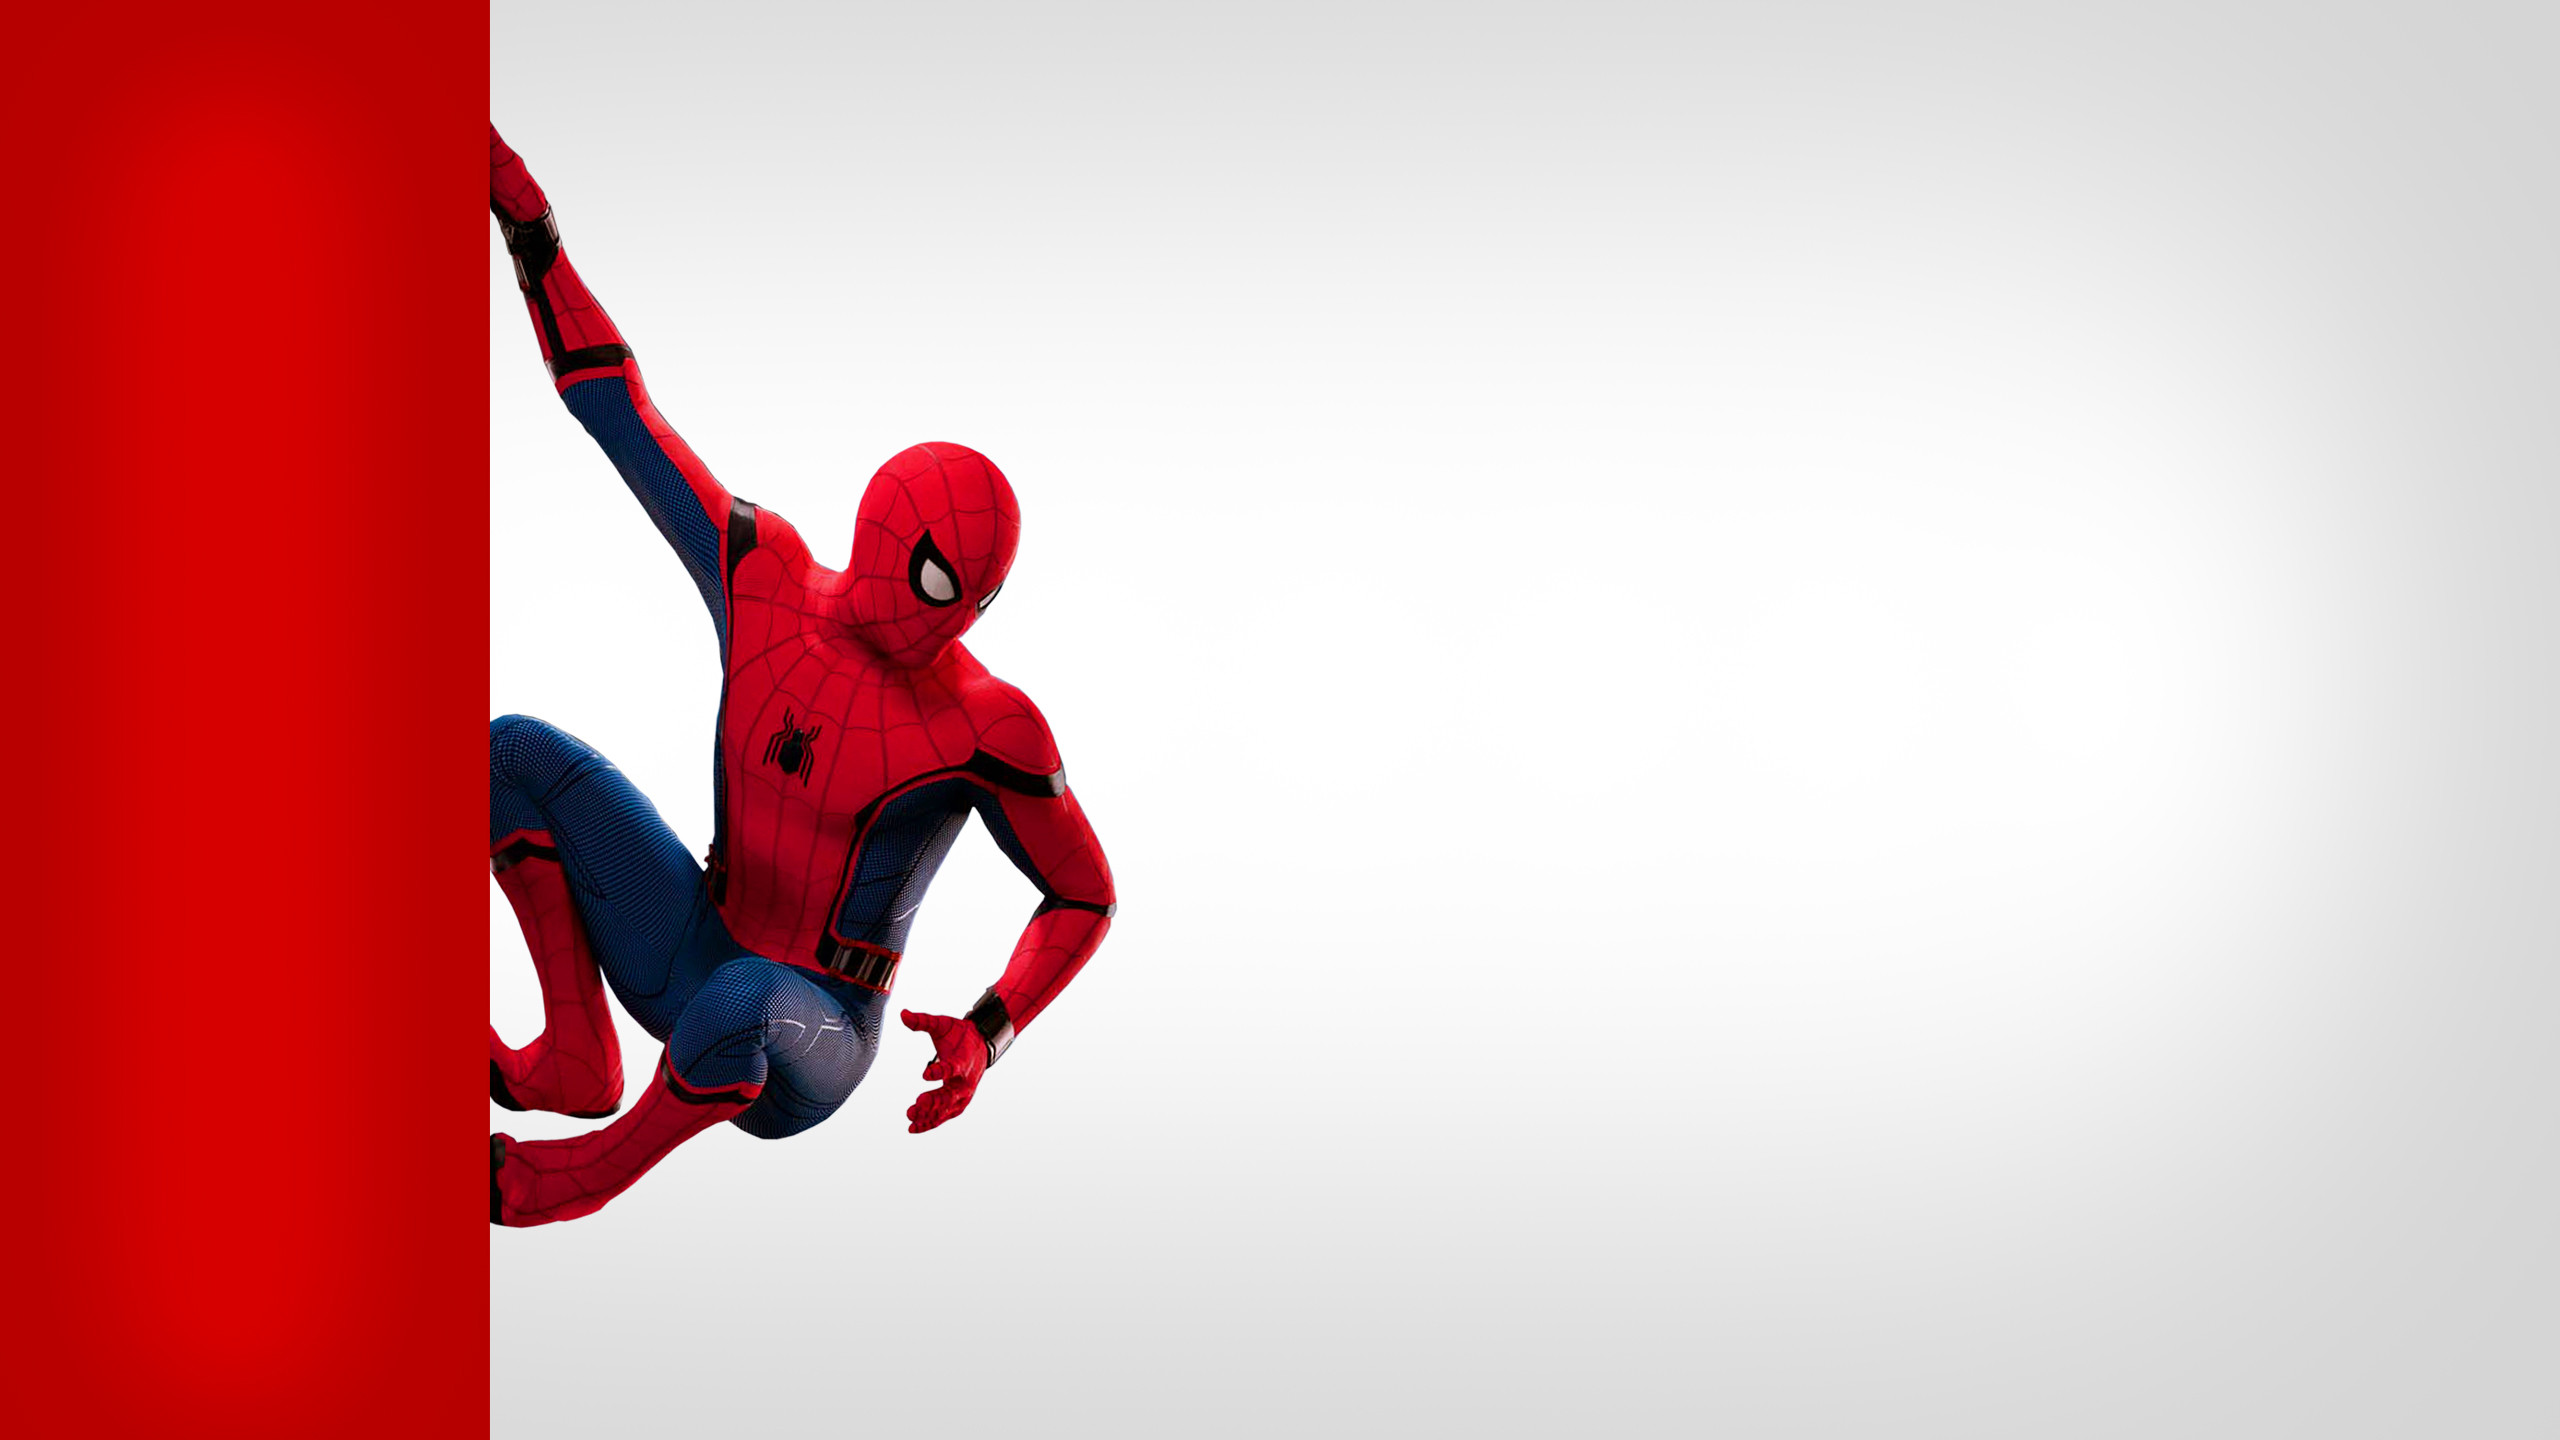 spiderman wallpaper,spider man,red,superhero,fictional character,recreation